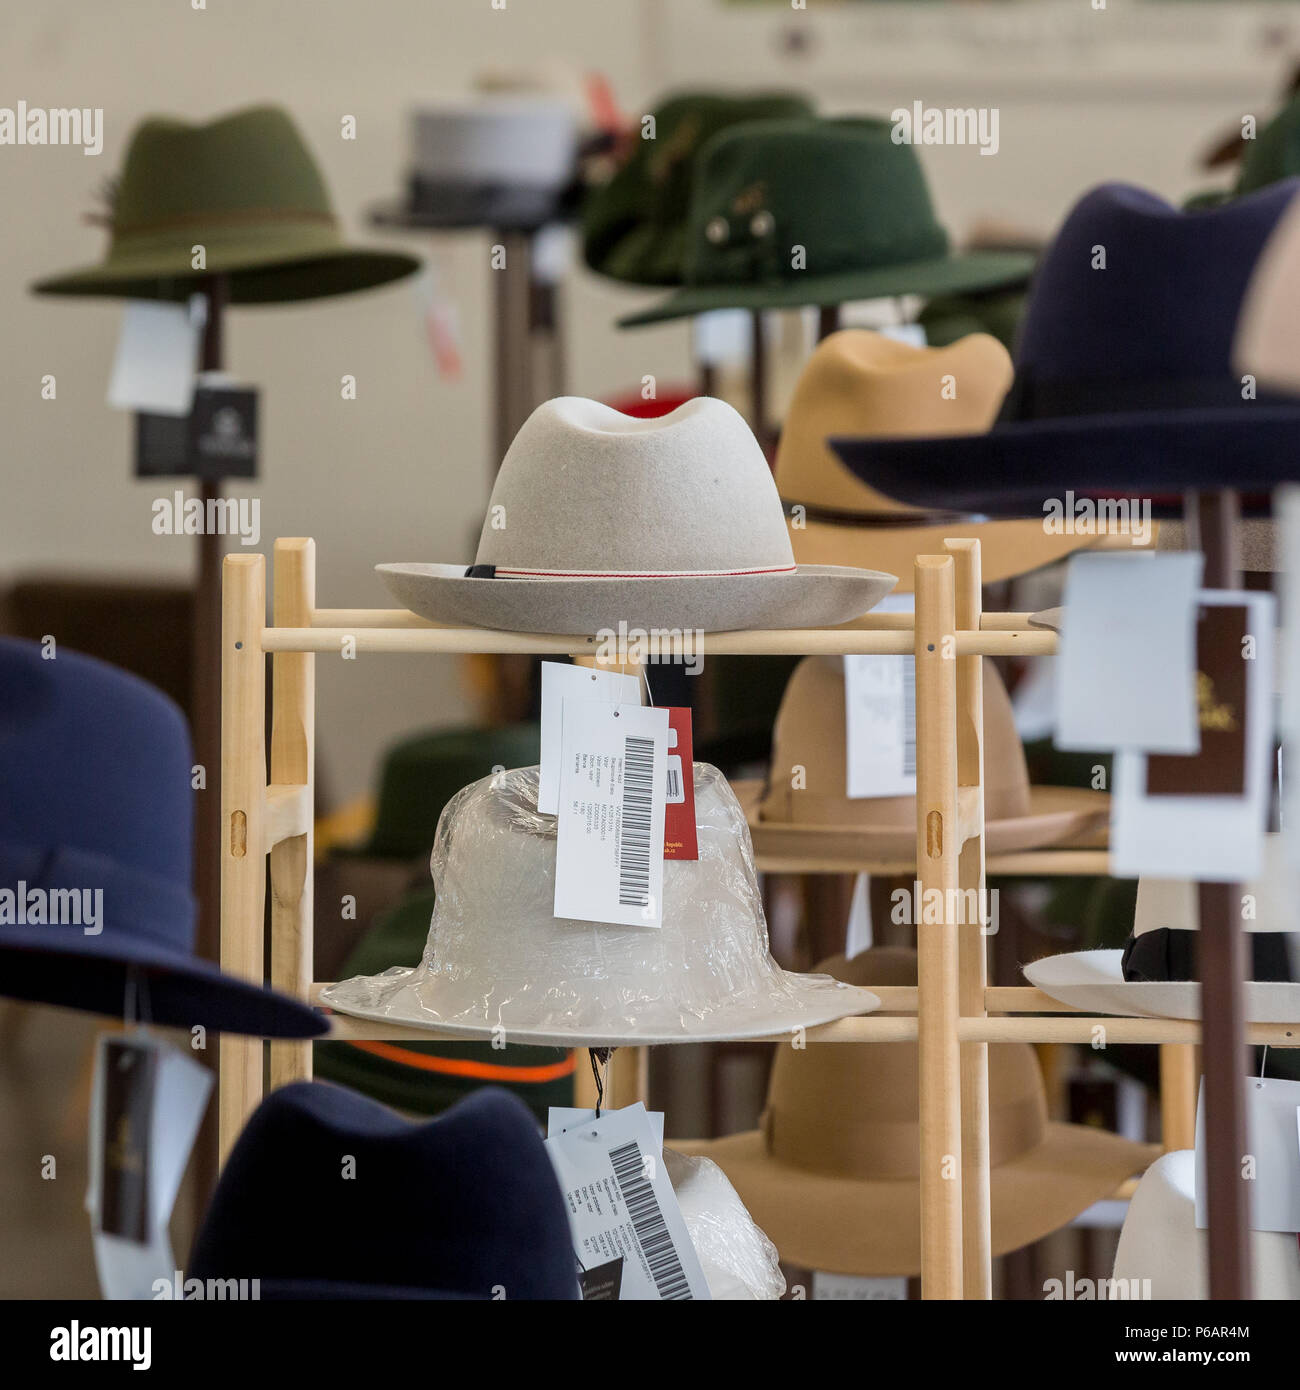 Tonak hat factory Stock Photo - Alamy